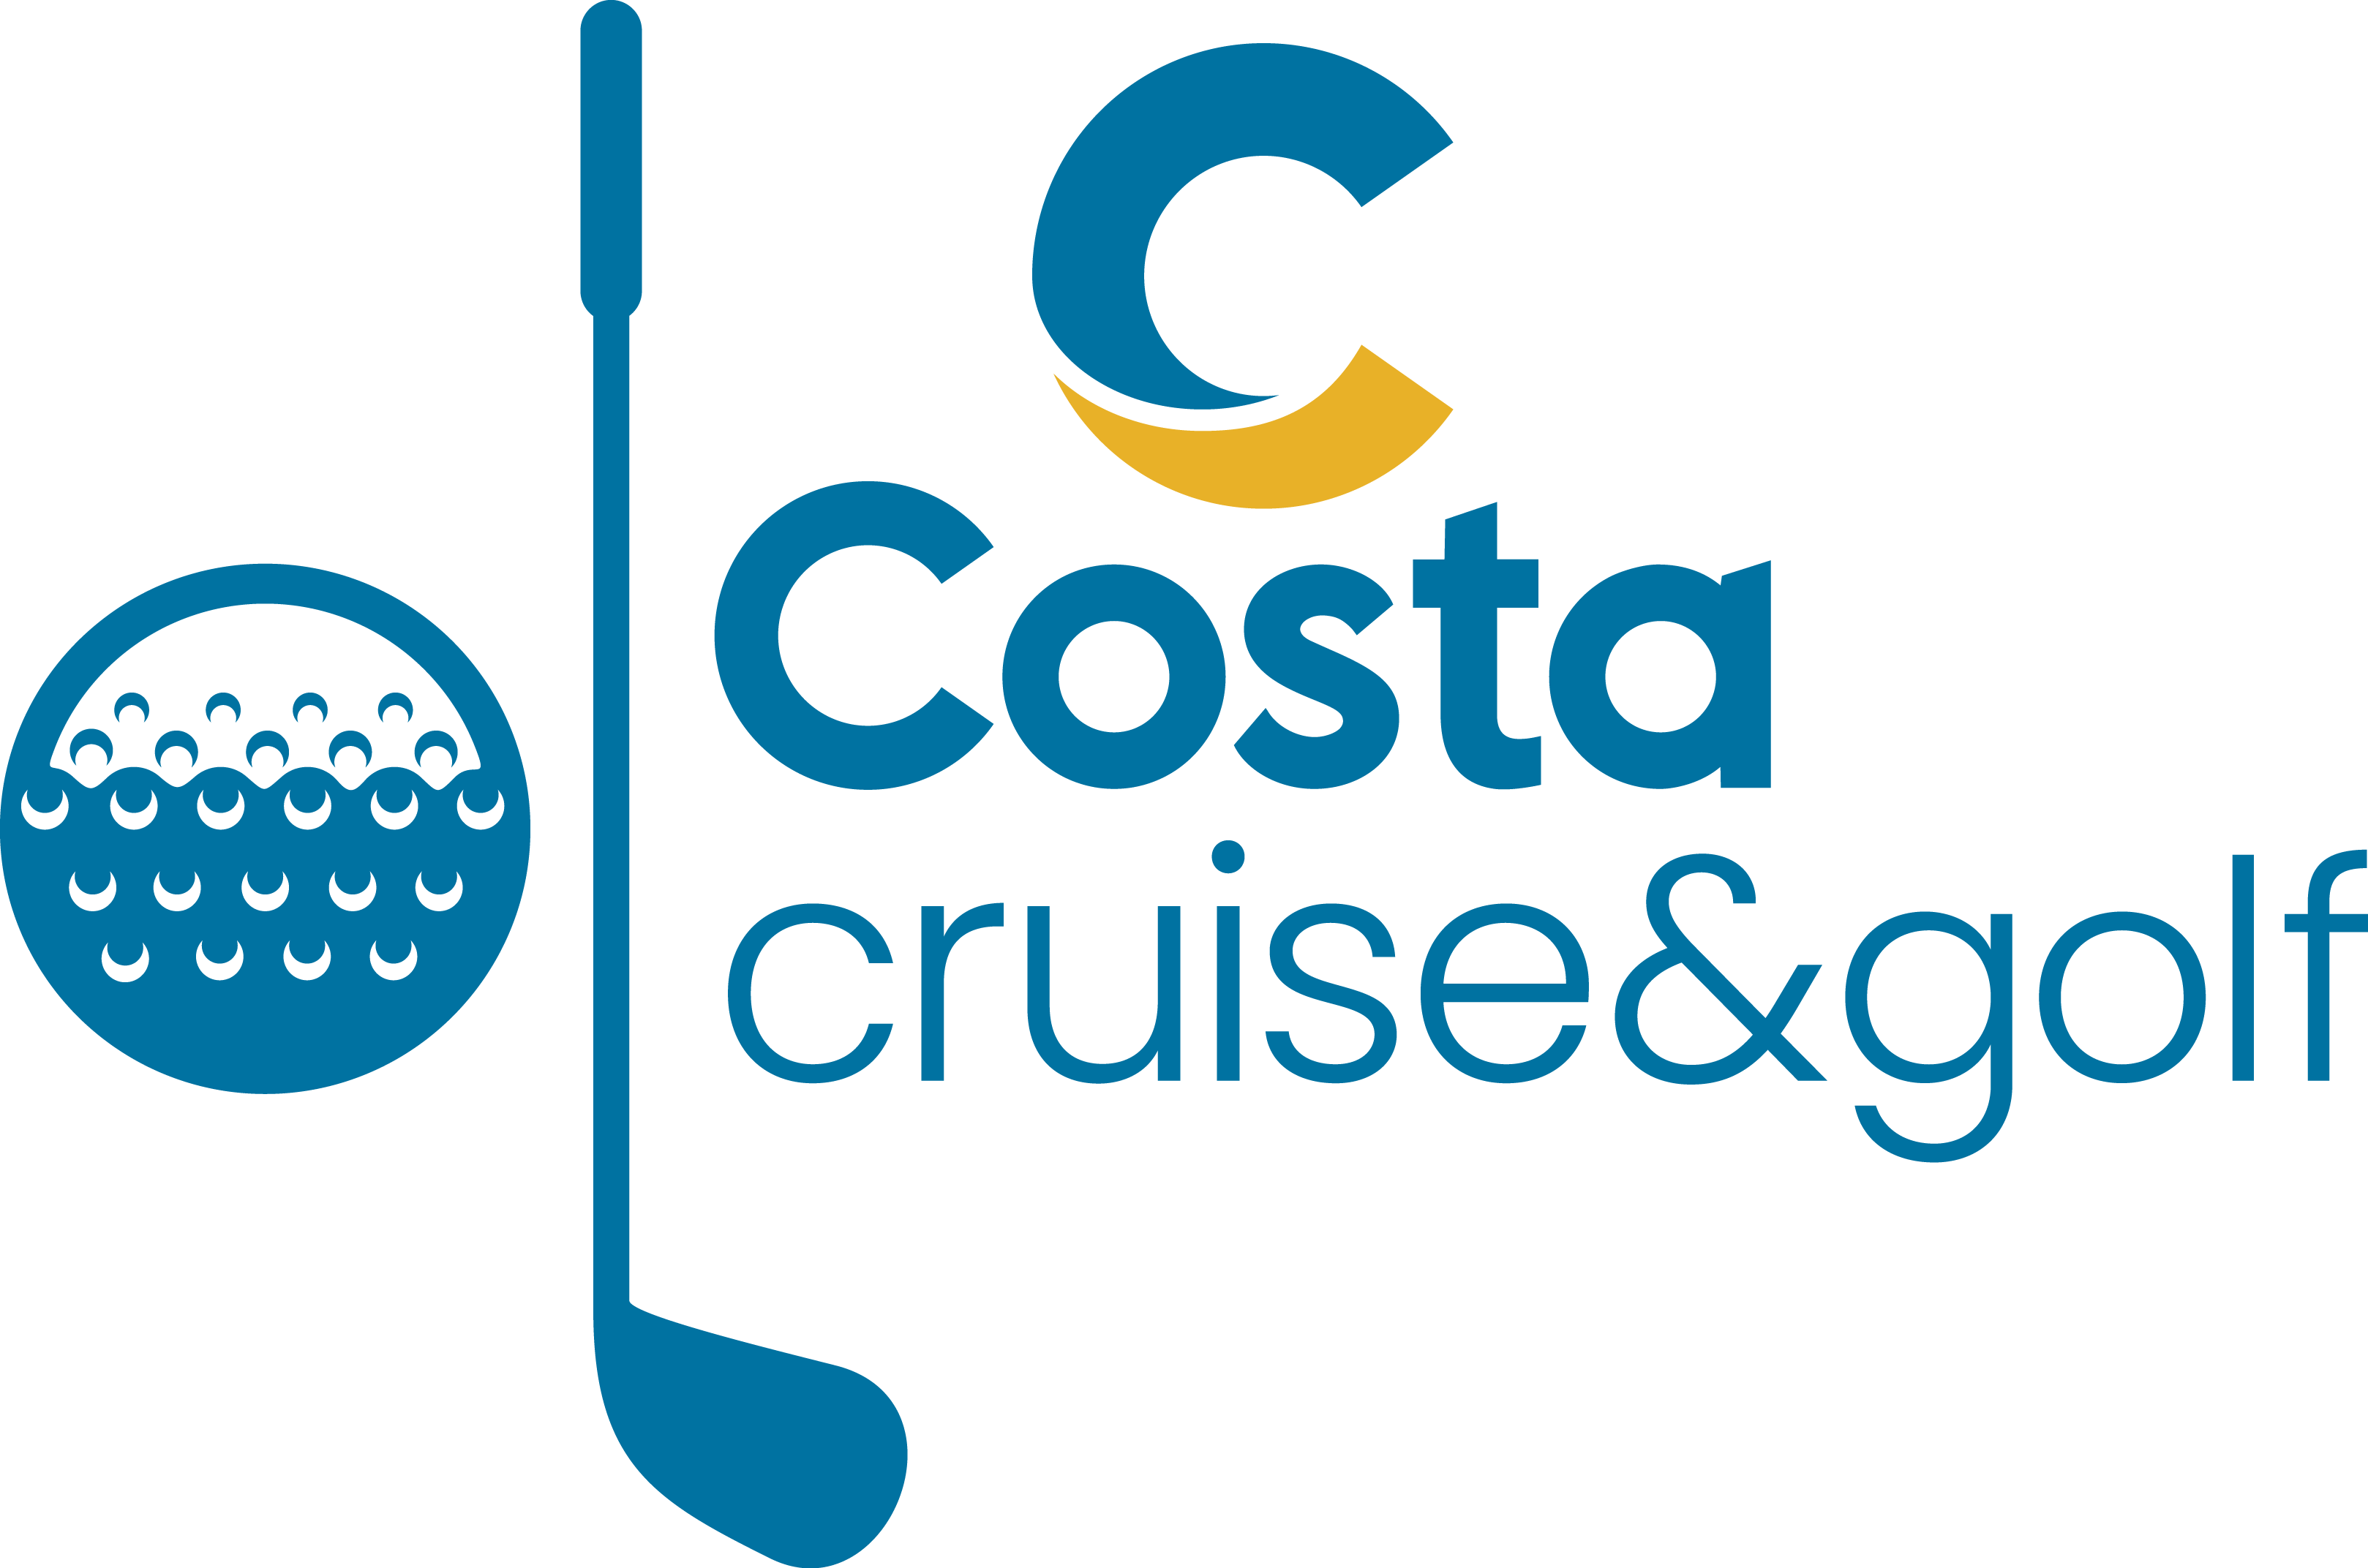 Costa Cruise & Golf